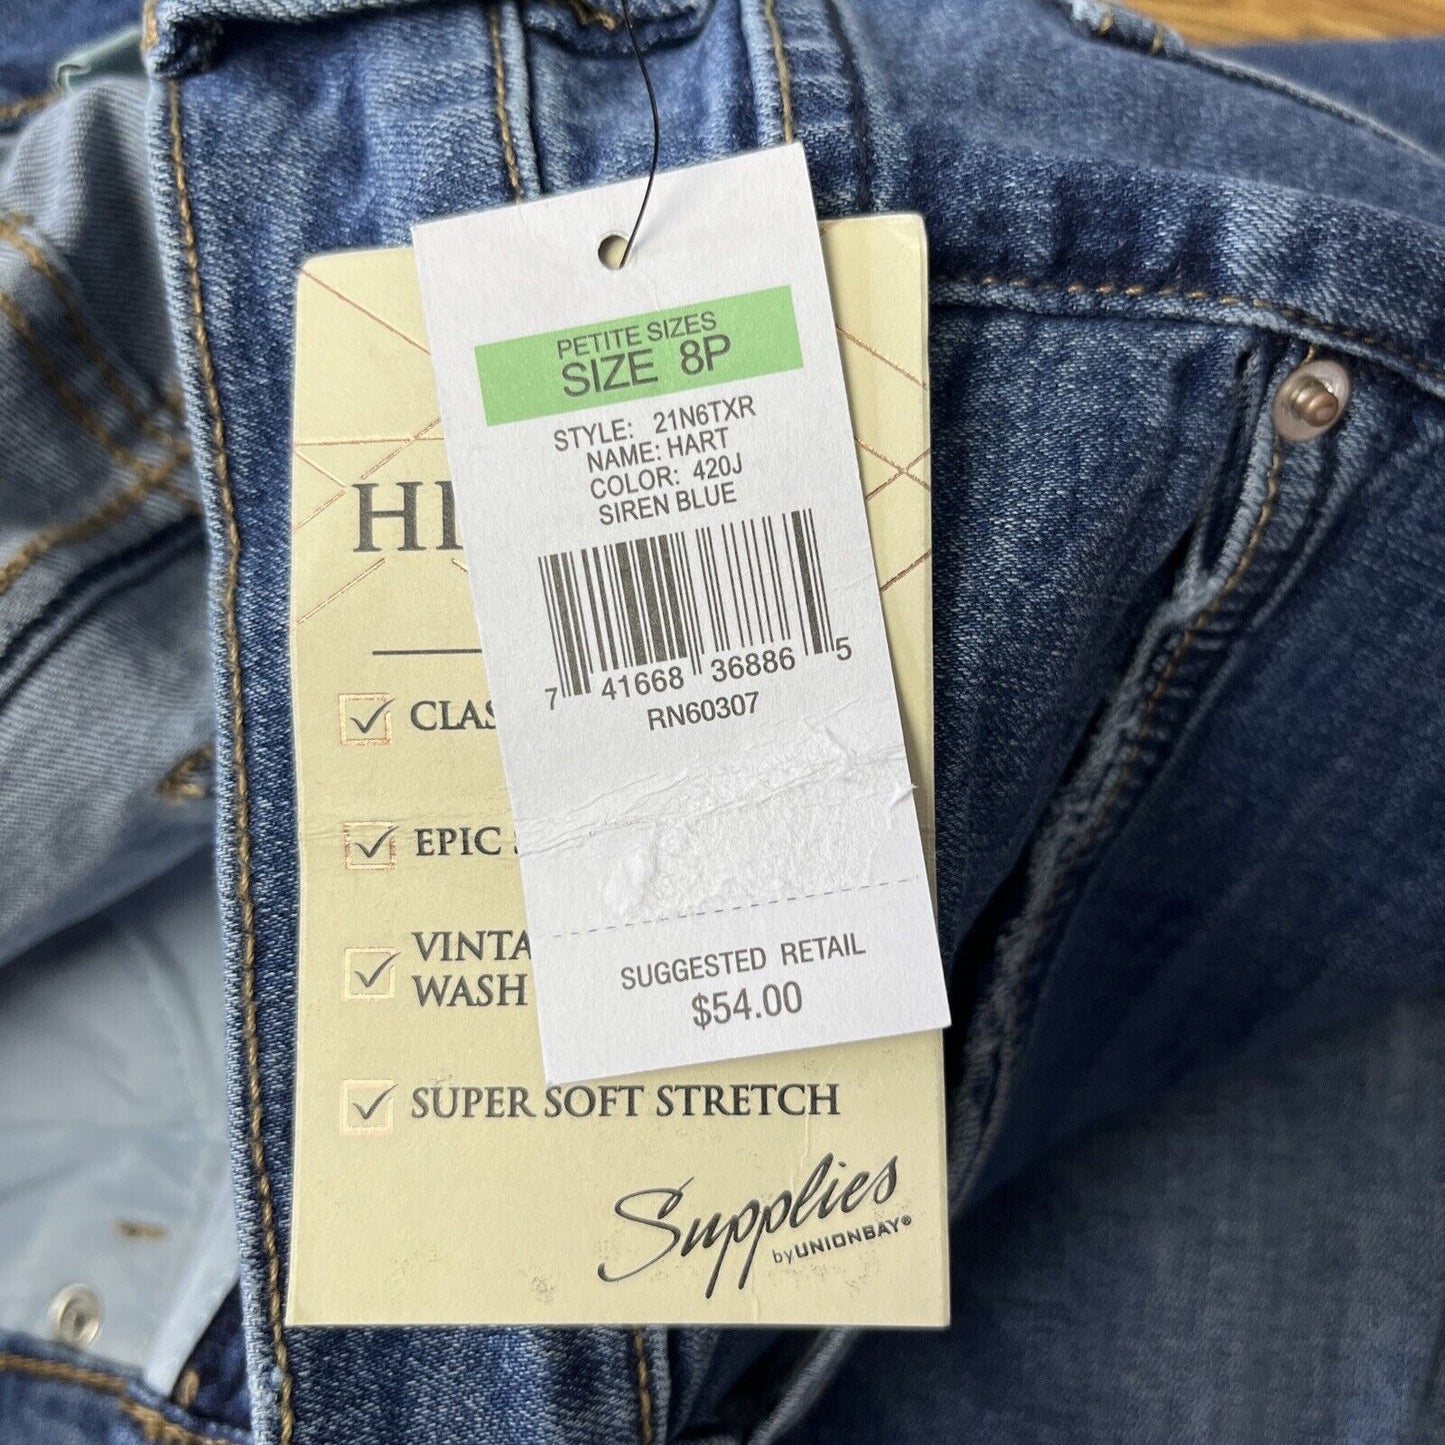 Supplies x Union Bay Maren High Rise Distressed Slim Straight Jeans NWT - Sz 8P